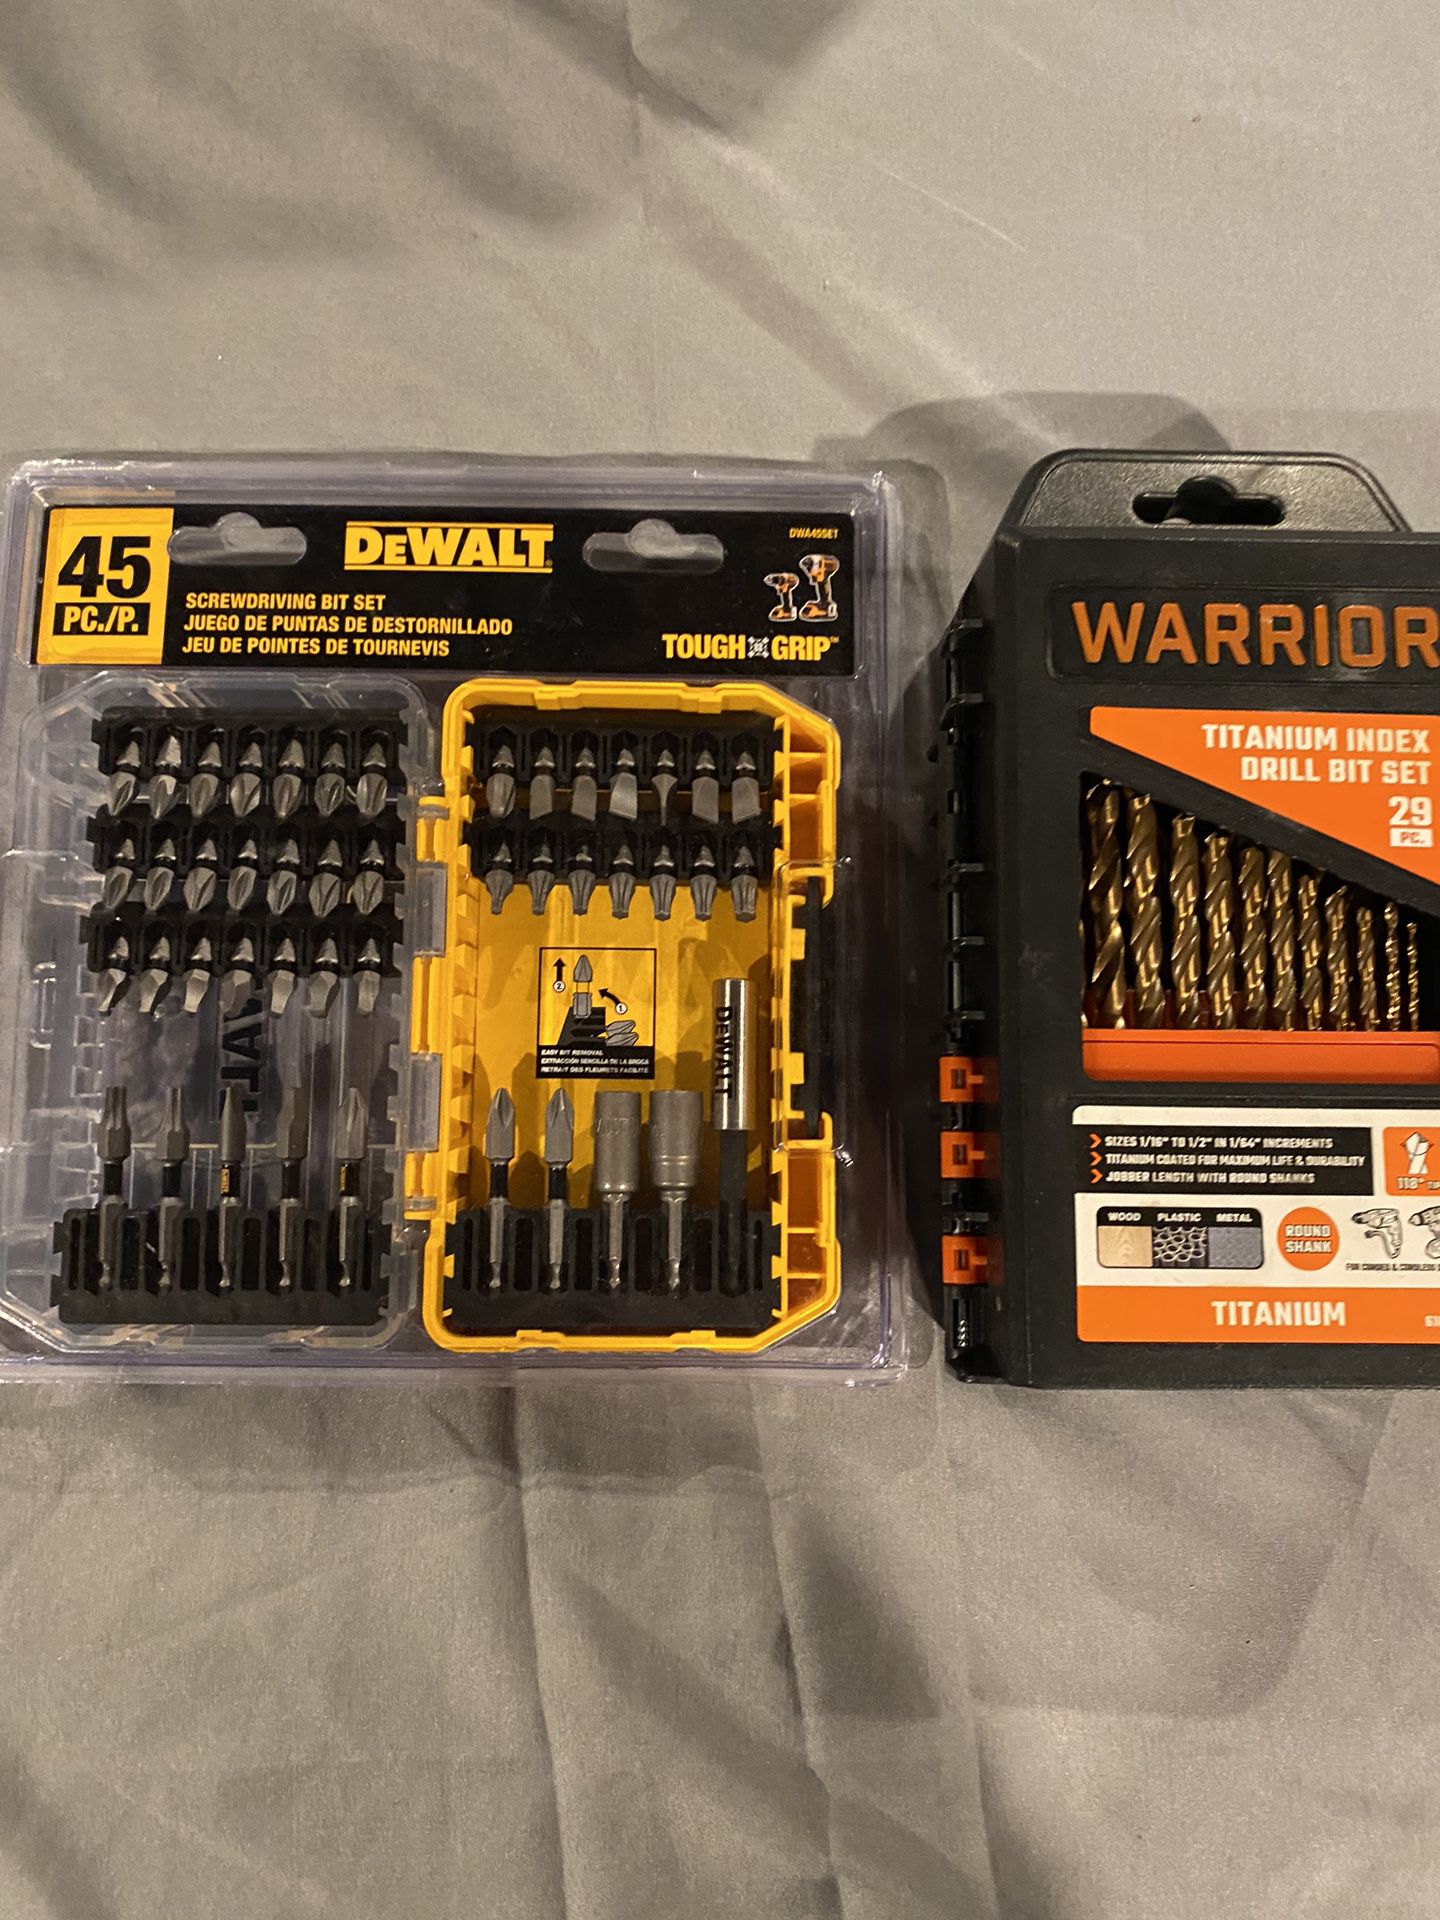 45pc Dewalt Bit Set And 29pc Warrior Drill Bit Set 